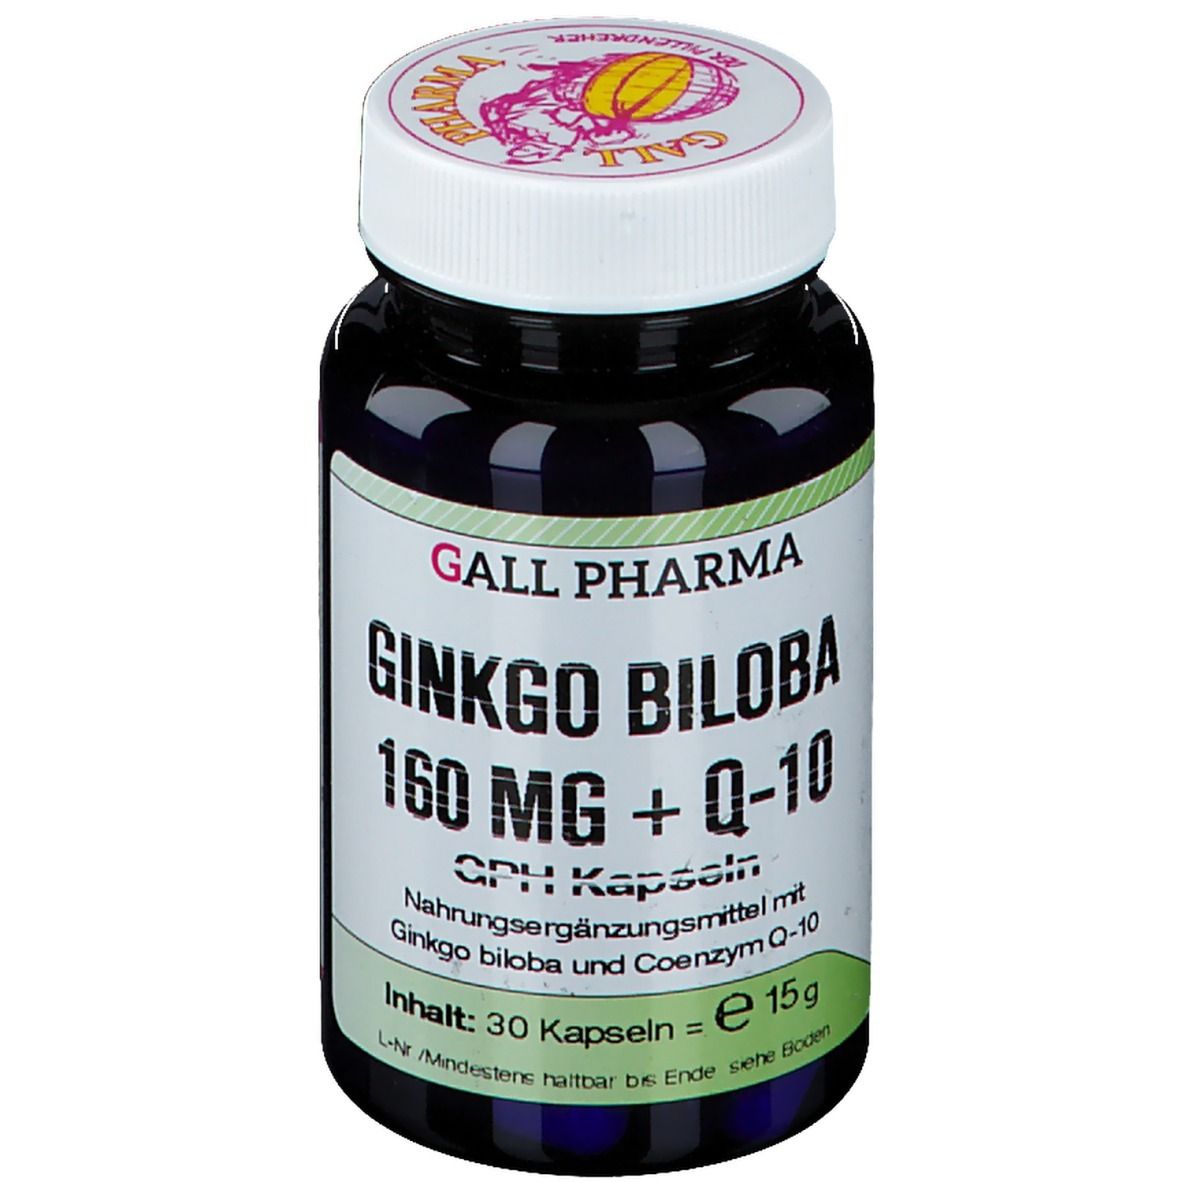 GALL PHARMA Ginkgo Biloba 160 mg + Q-10 GPH